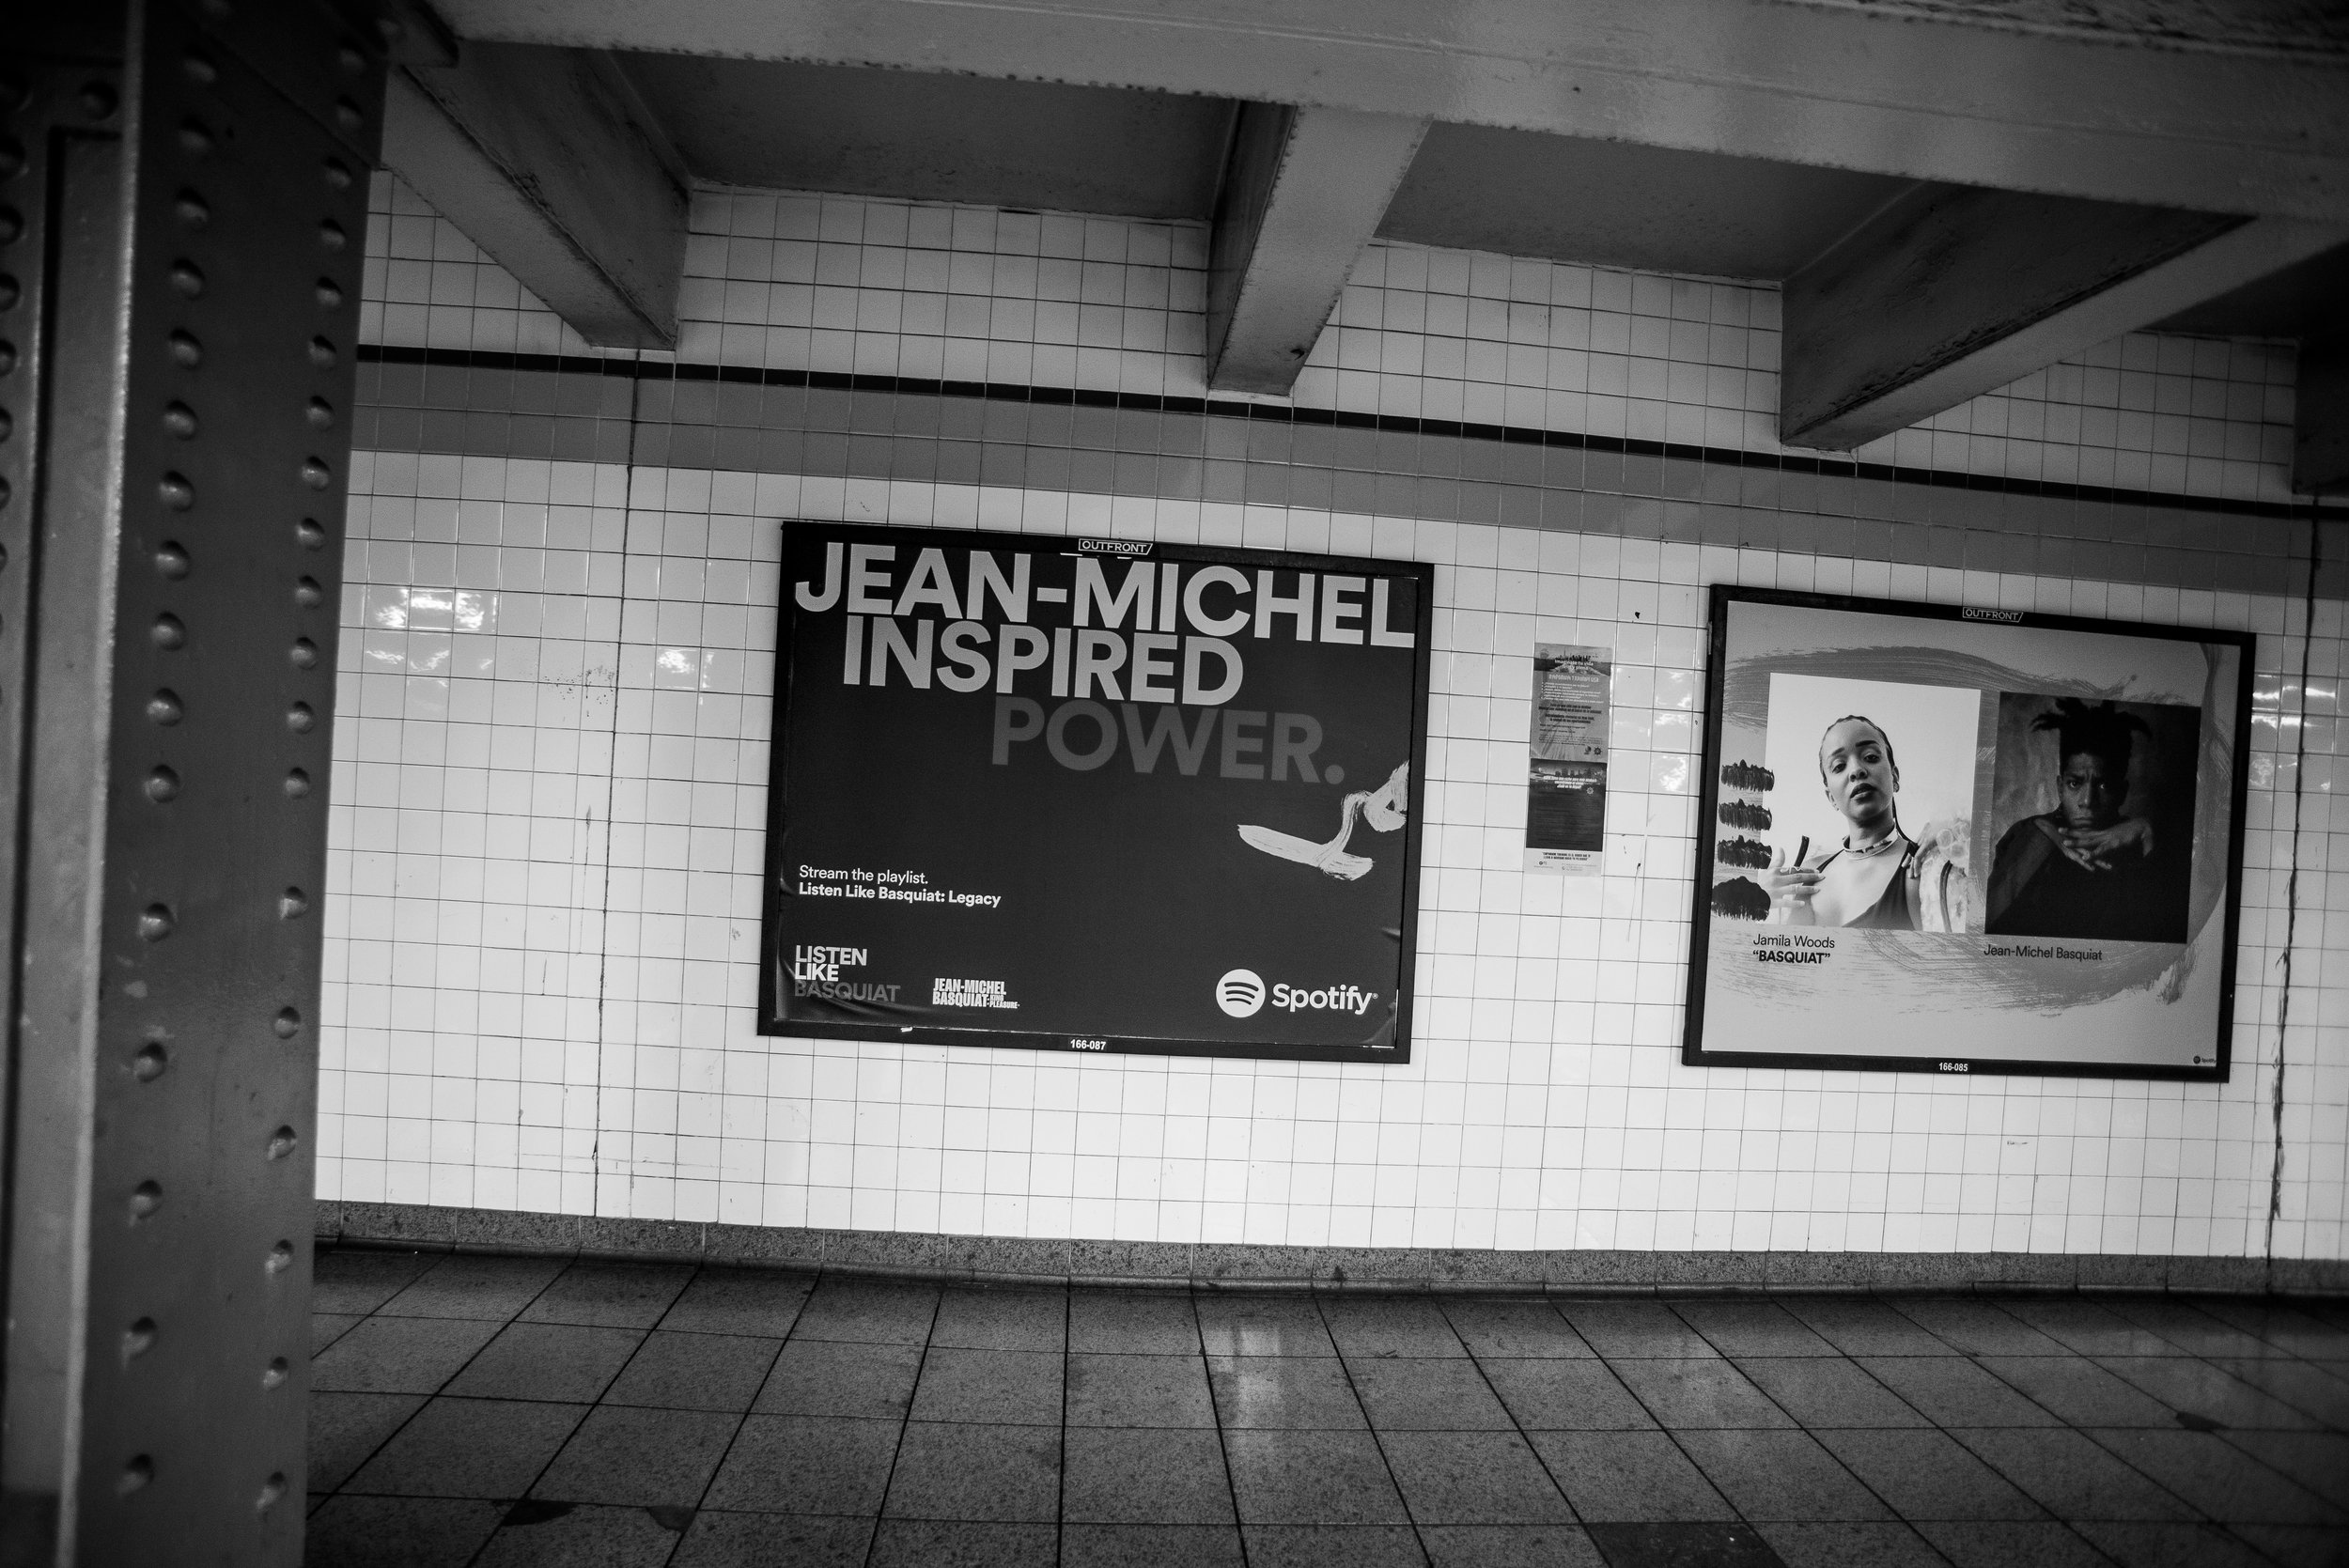 Basquiat in the Subway